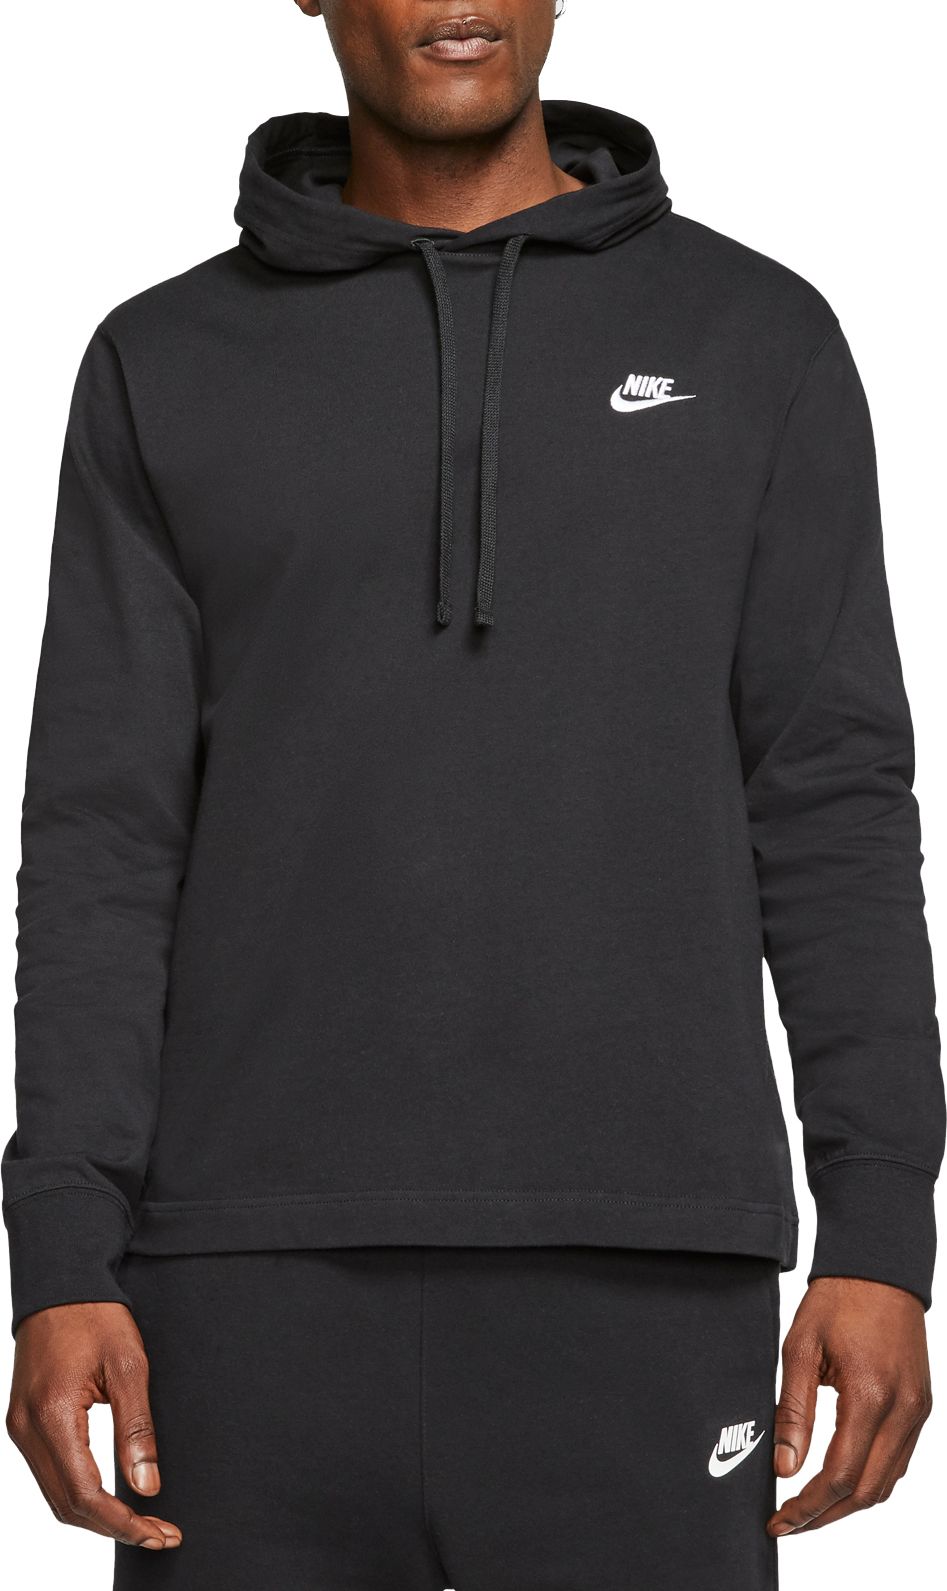 Nike sweatshirt mens dicks